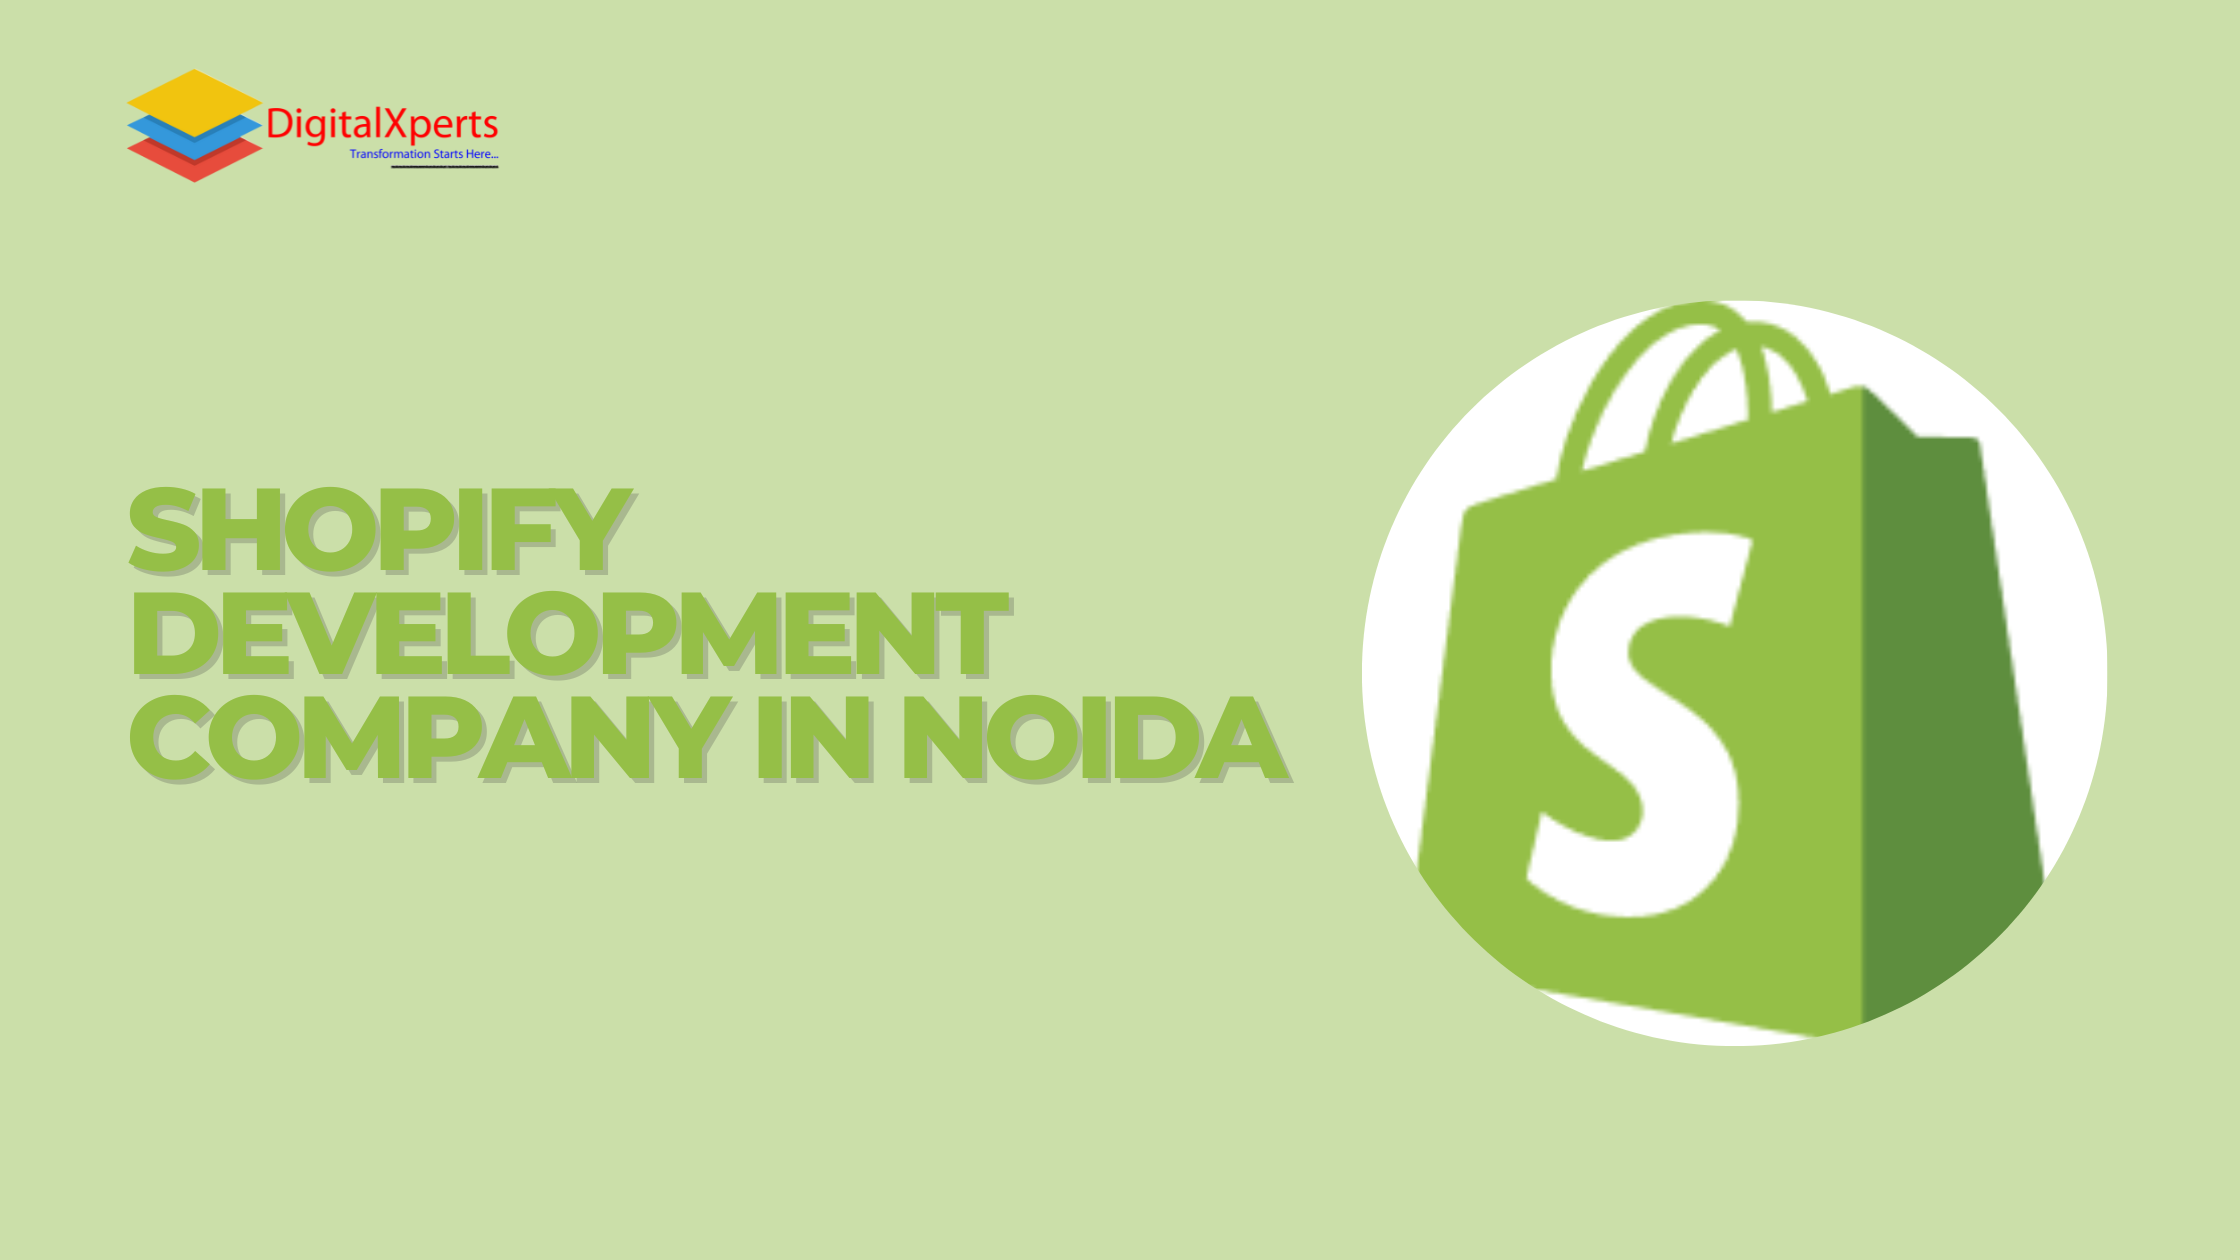 Shopify developers in Noida